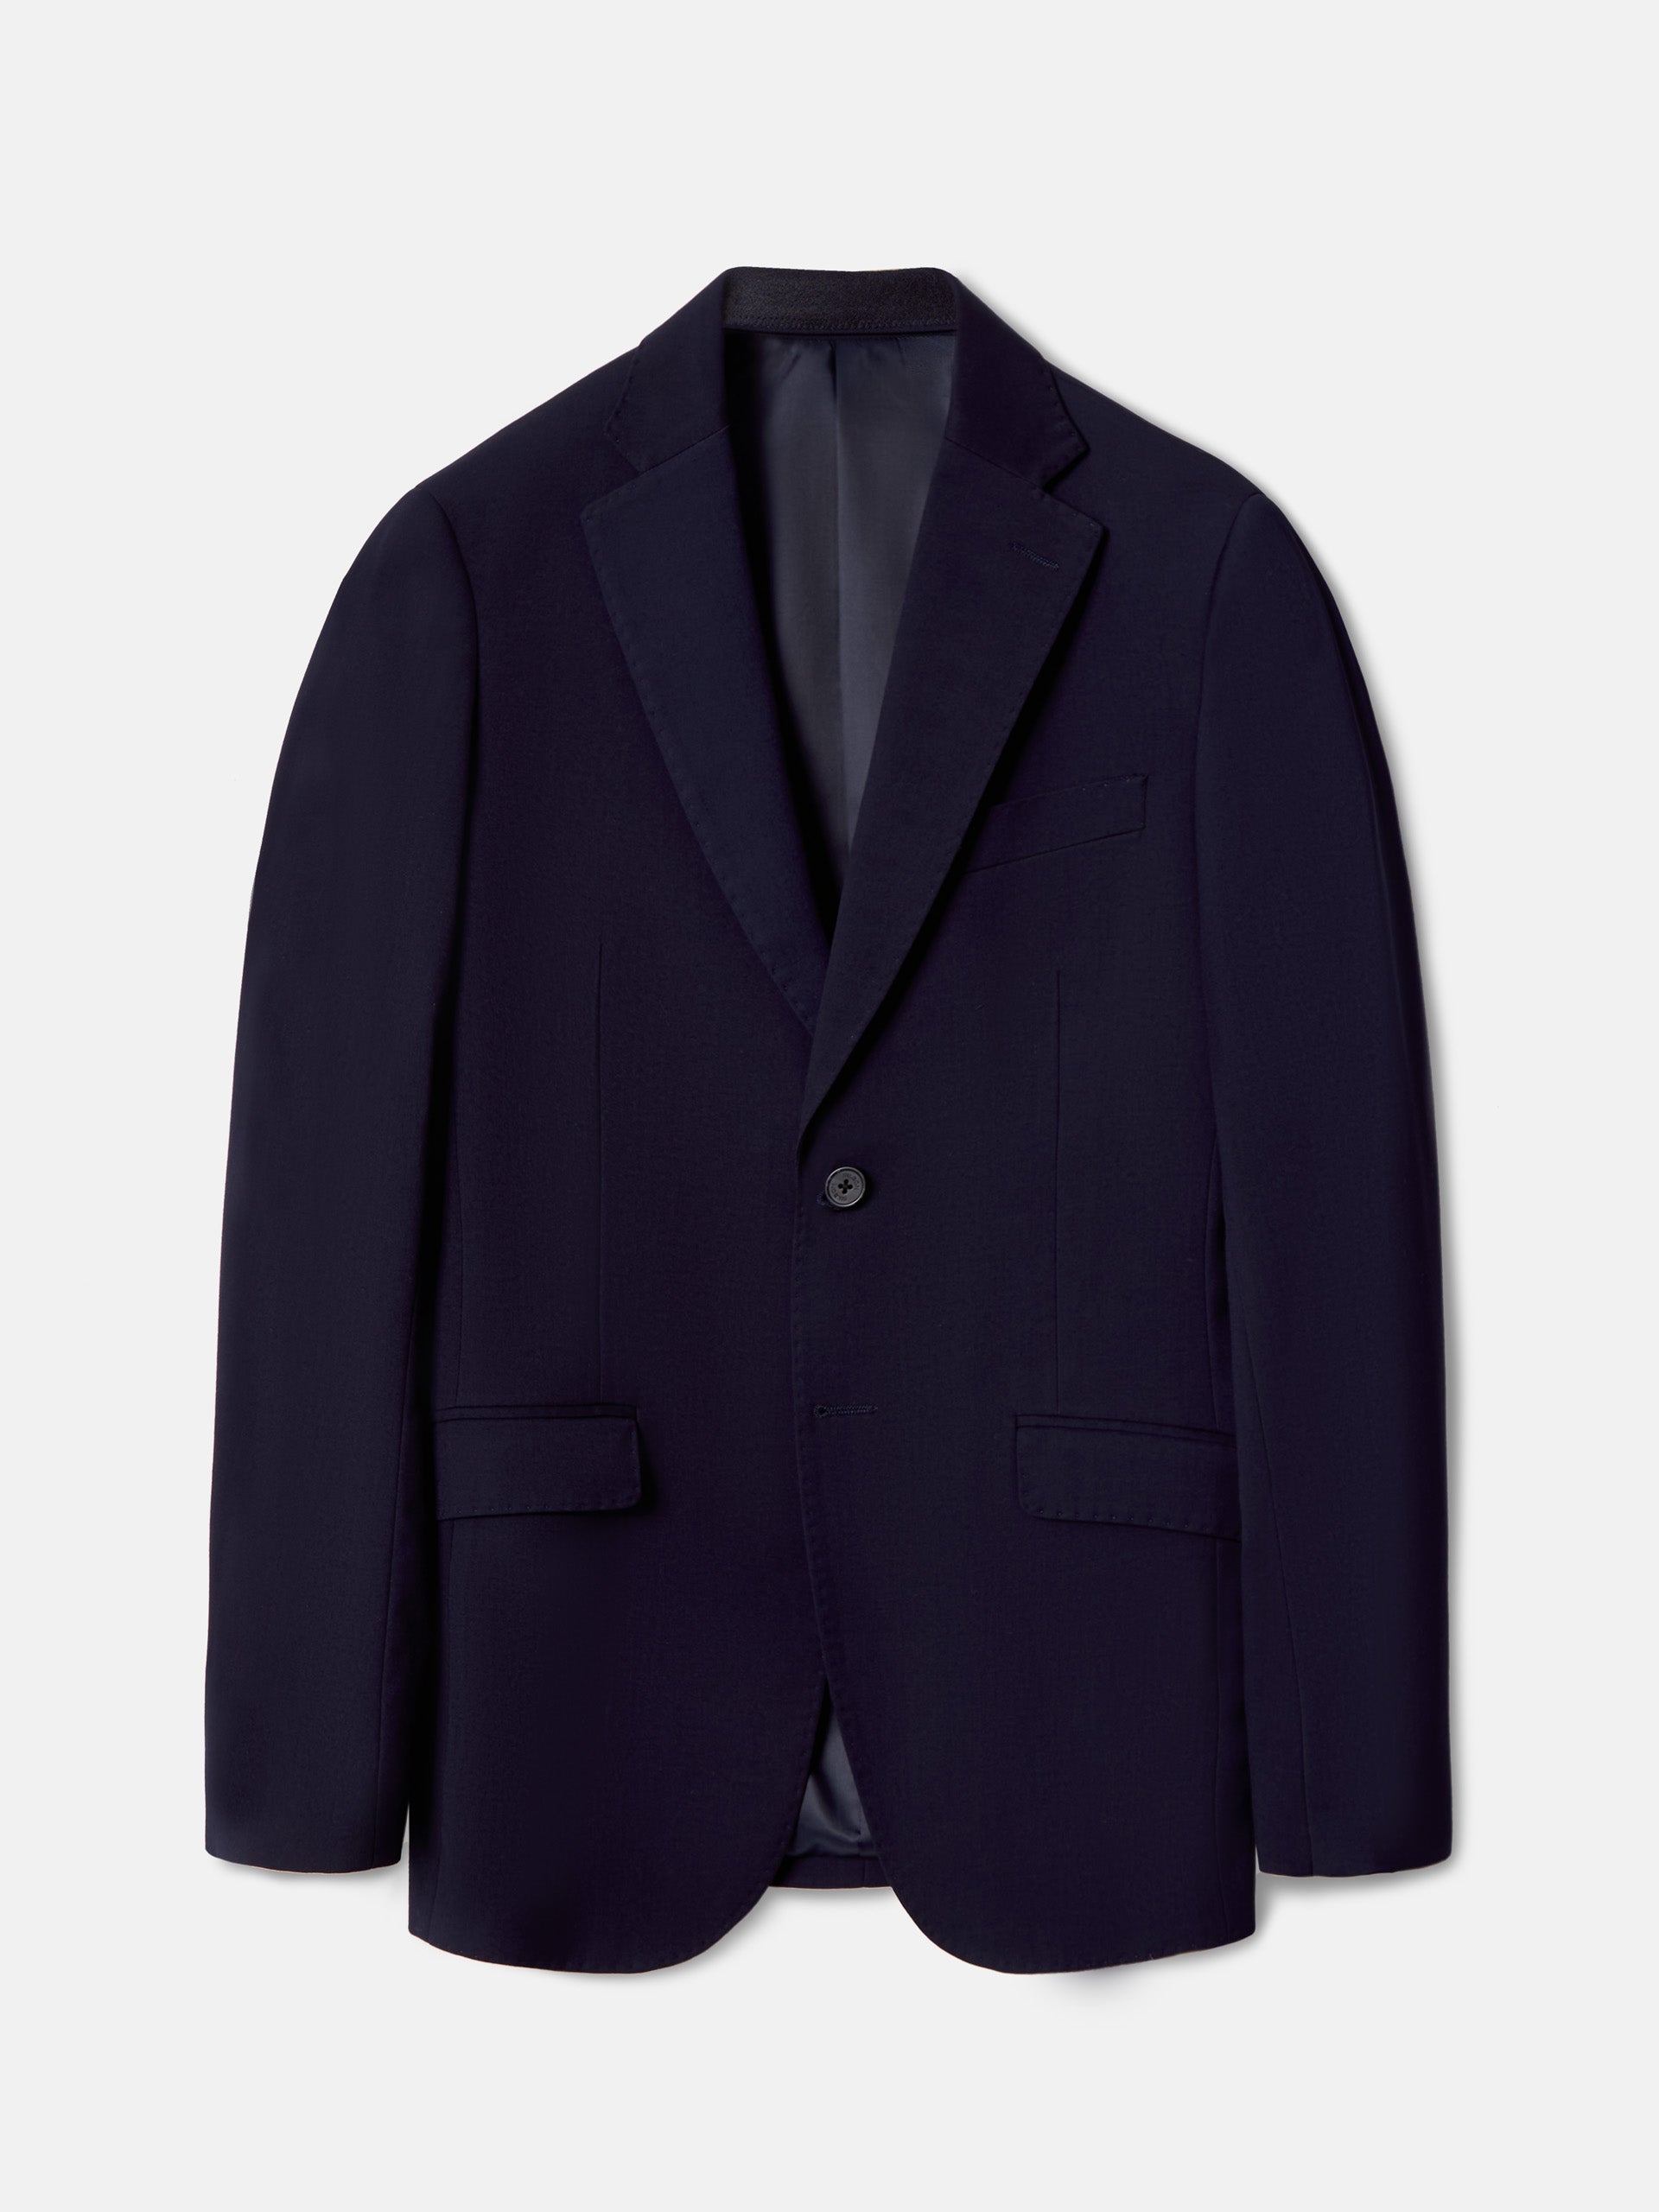 Navy blue essential suit jacket